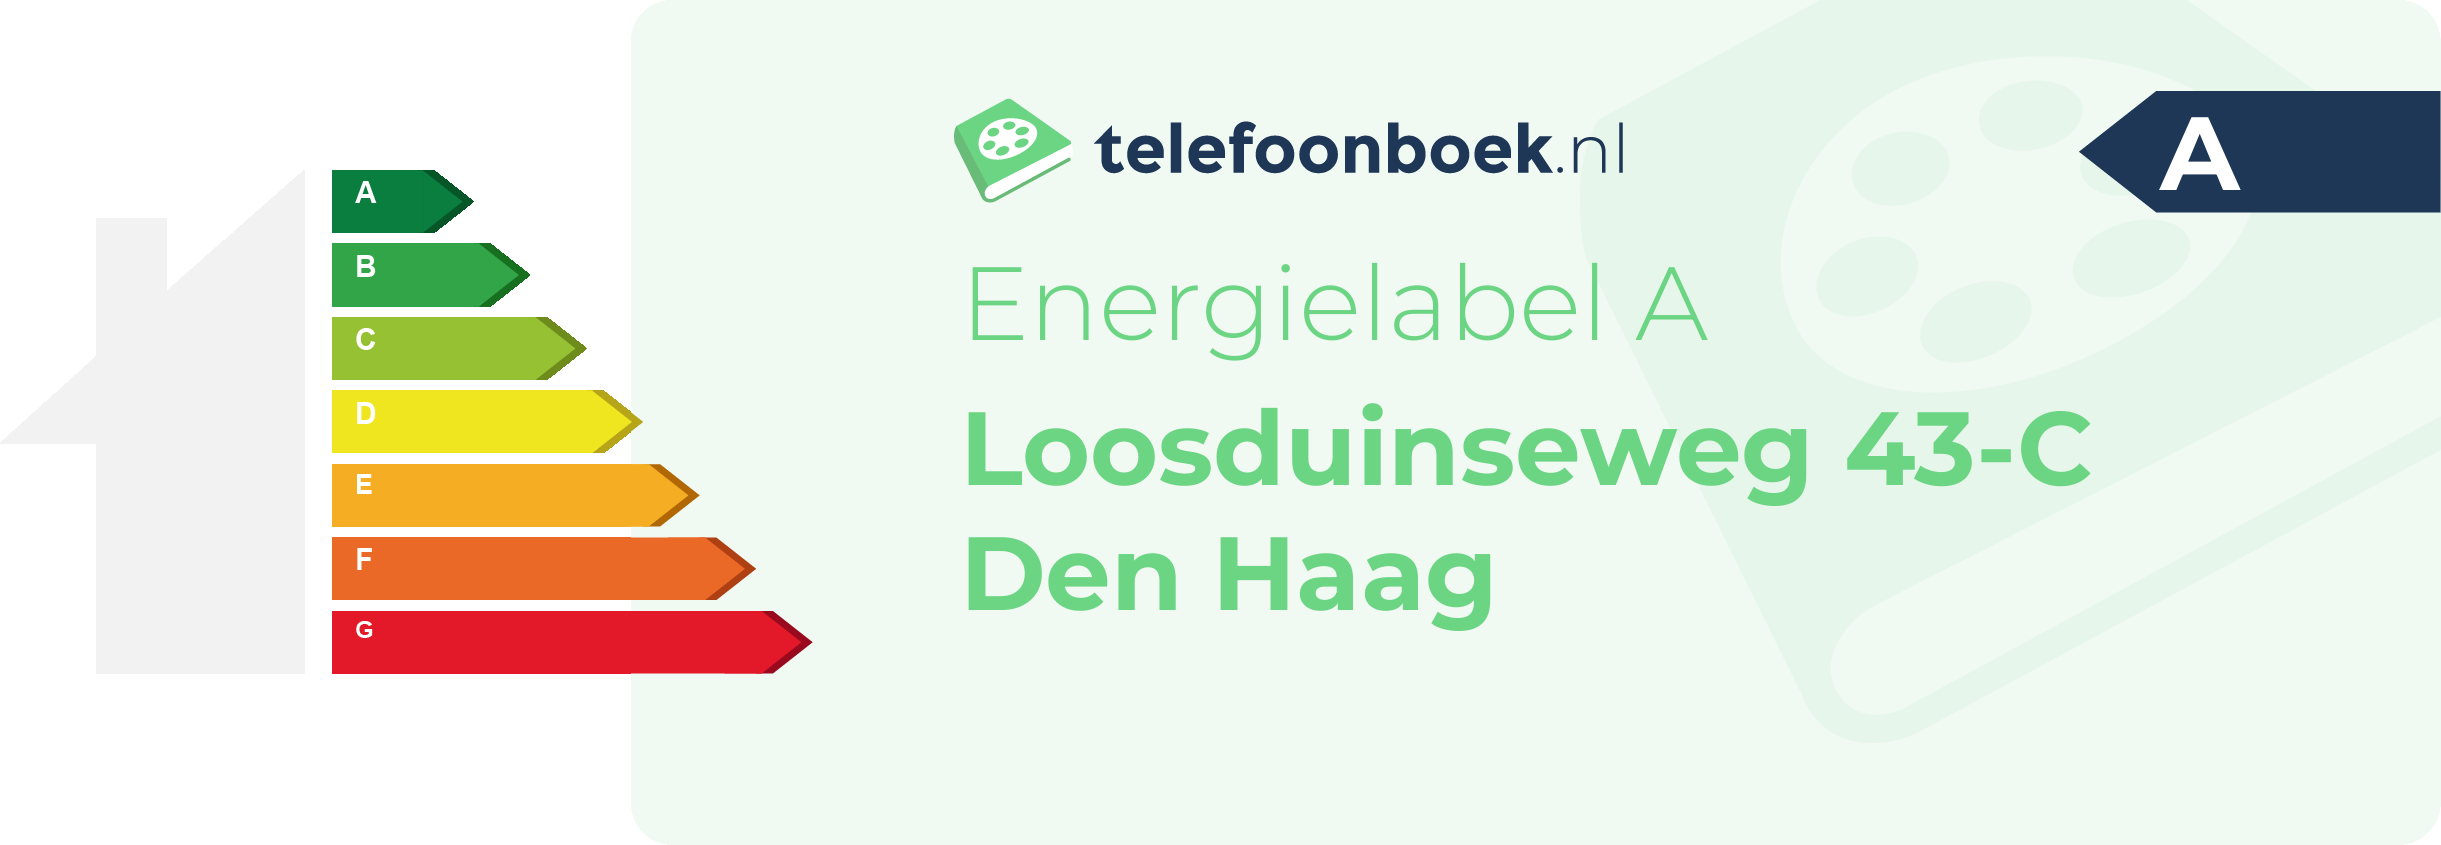 Energielabel Loosduinseweg 43-C Den Haag